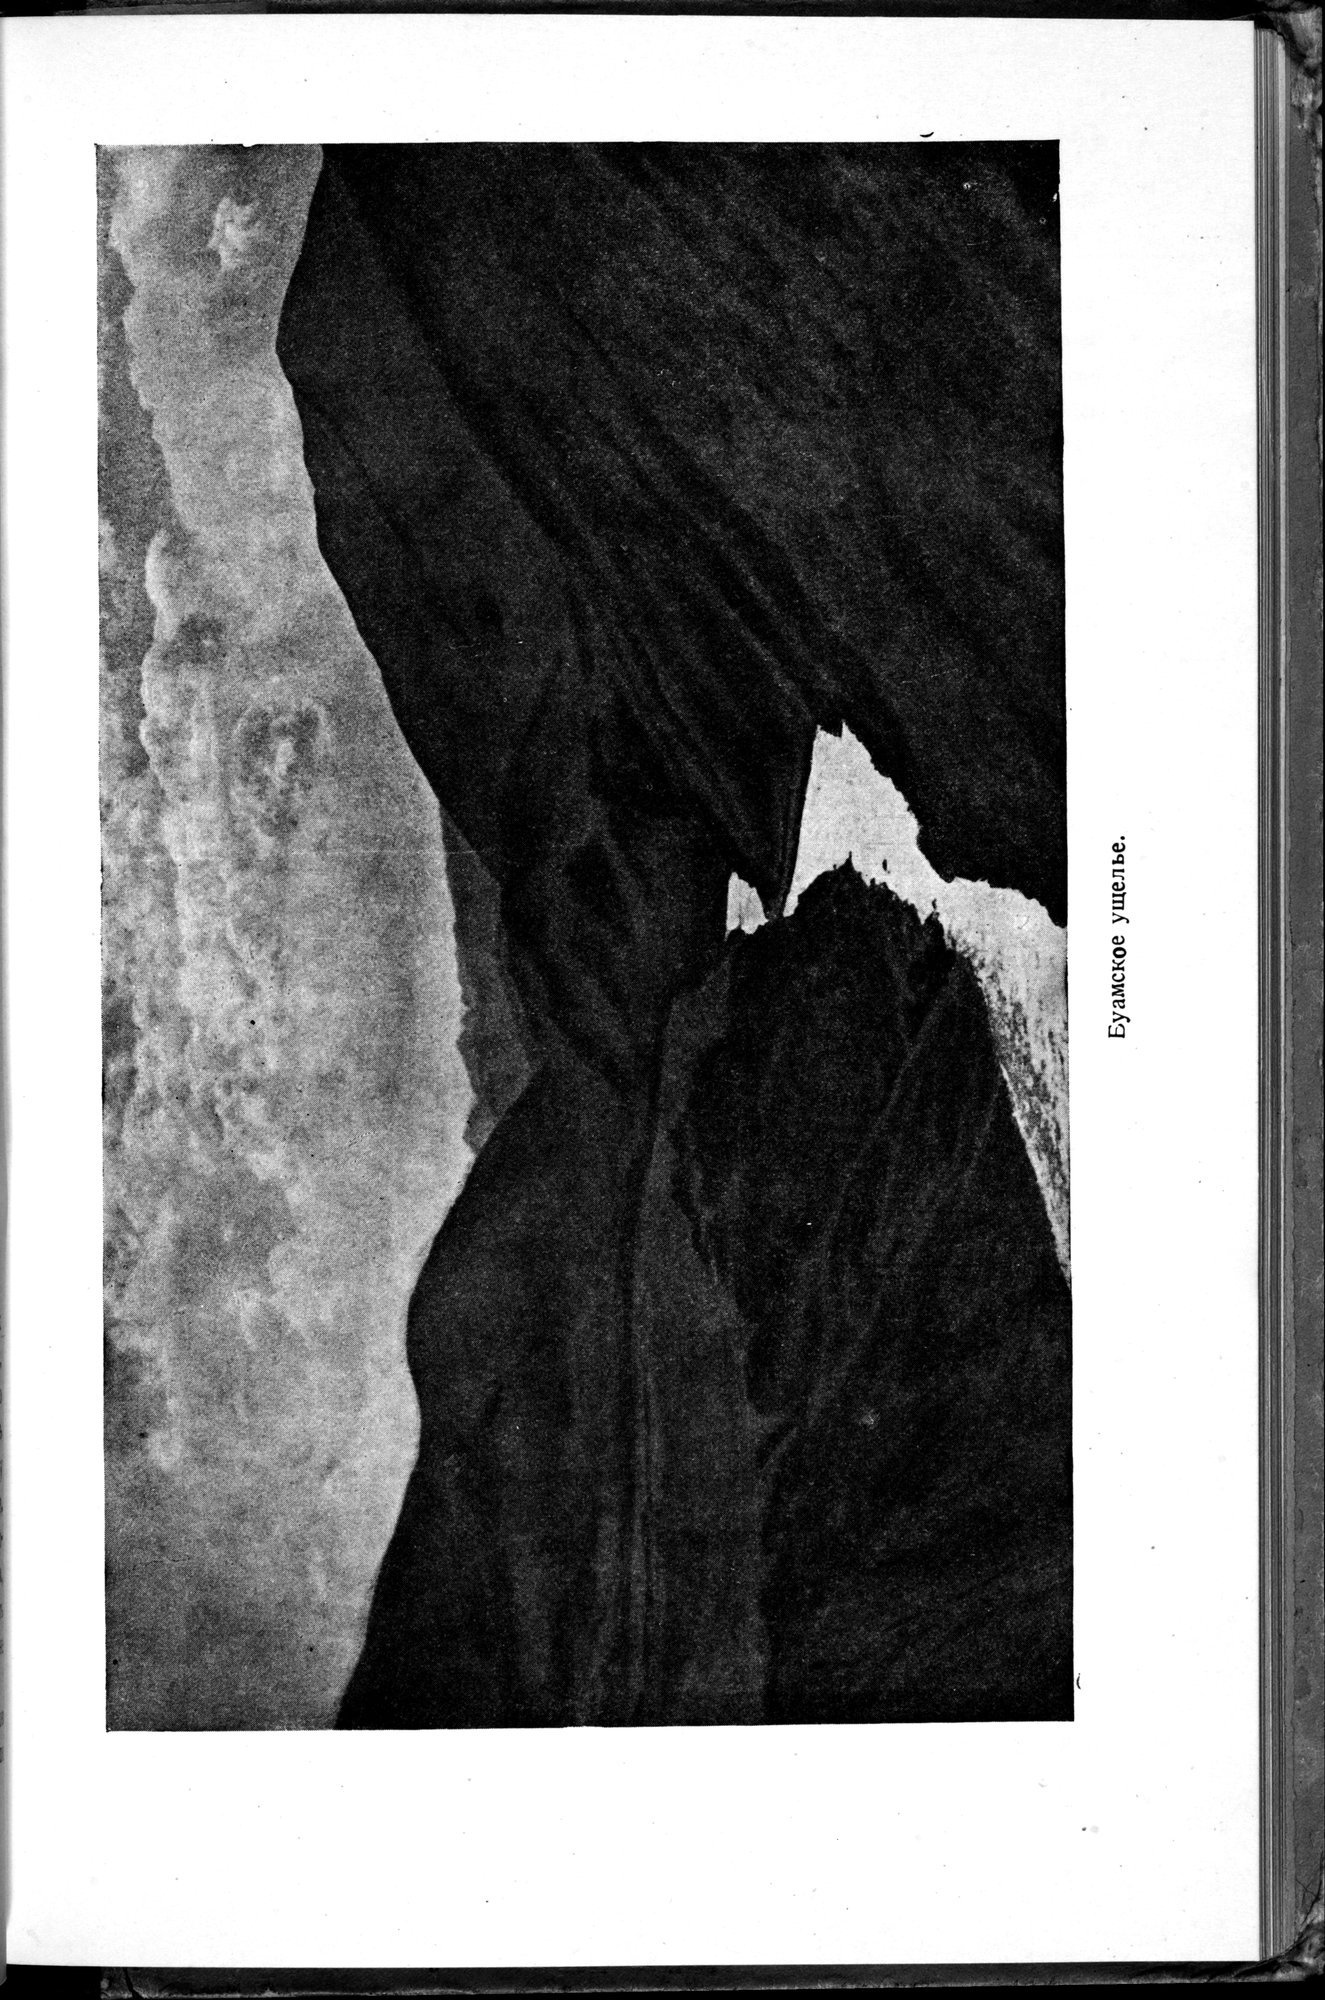 Puteshestvie v Tian' - Shan' v 1856-1857 godakh : vol.1 / Page 125 (Grayscale High Resolution Image)